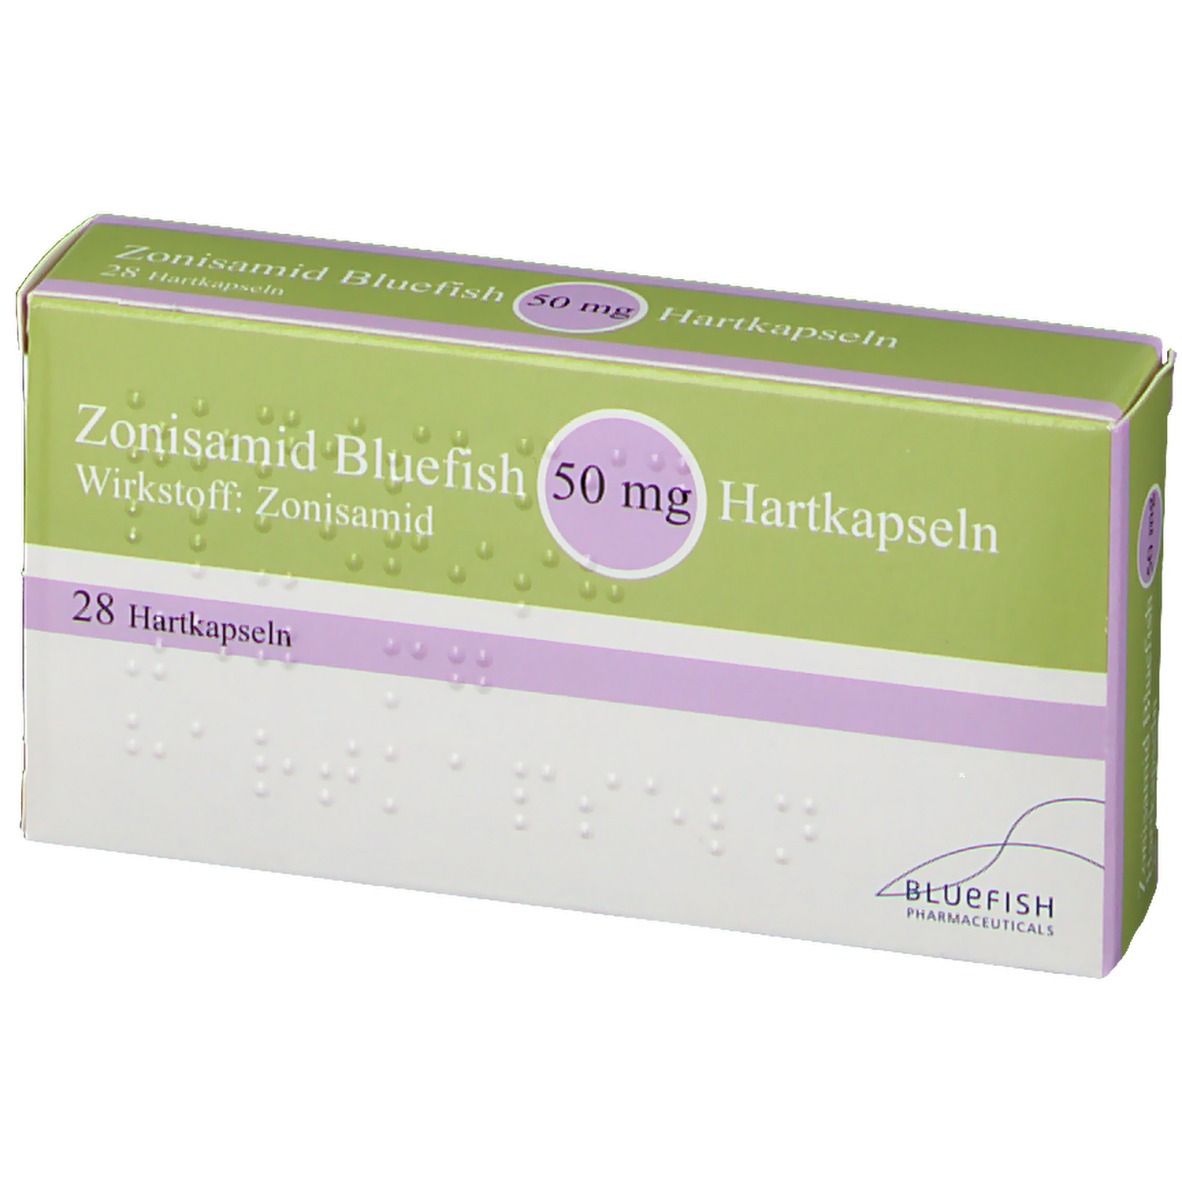 Zonisamid Bluefish 50 mg